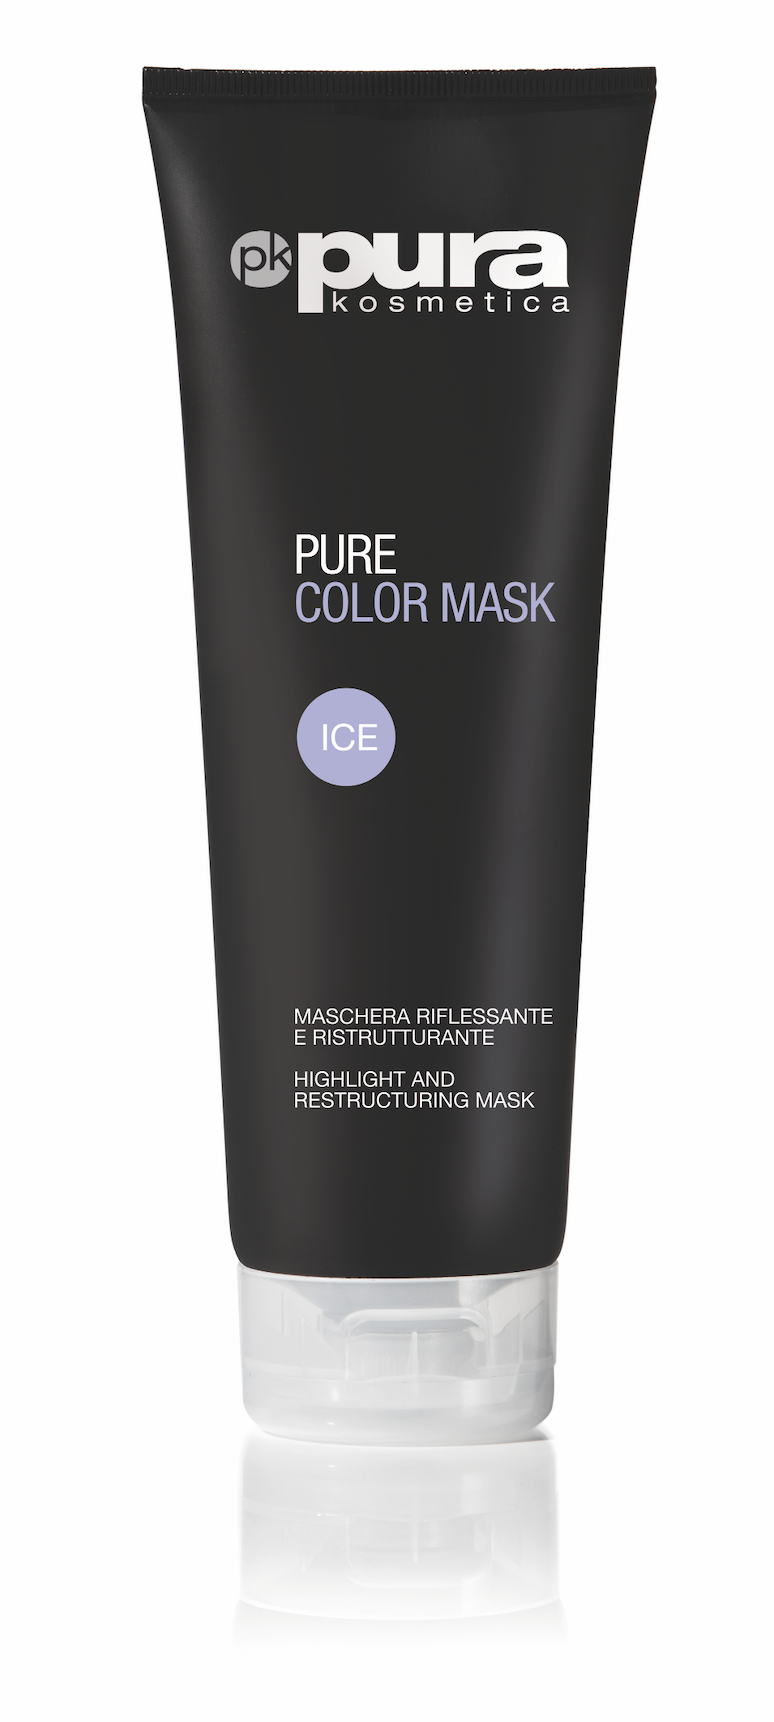 Pura Kosmetica Pure Color Mask Ice, 250ml